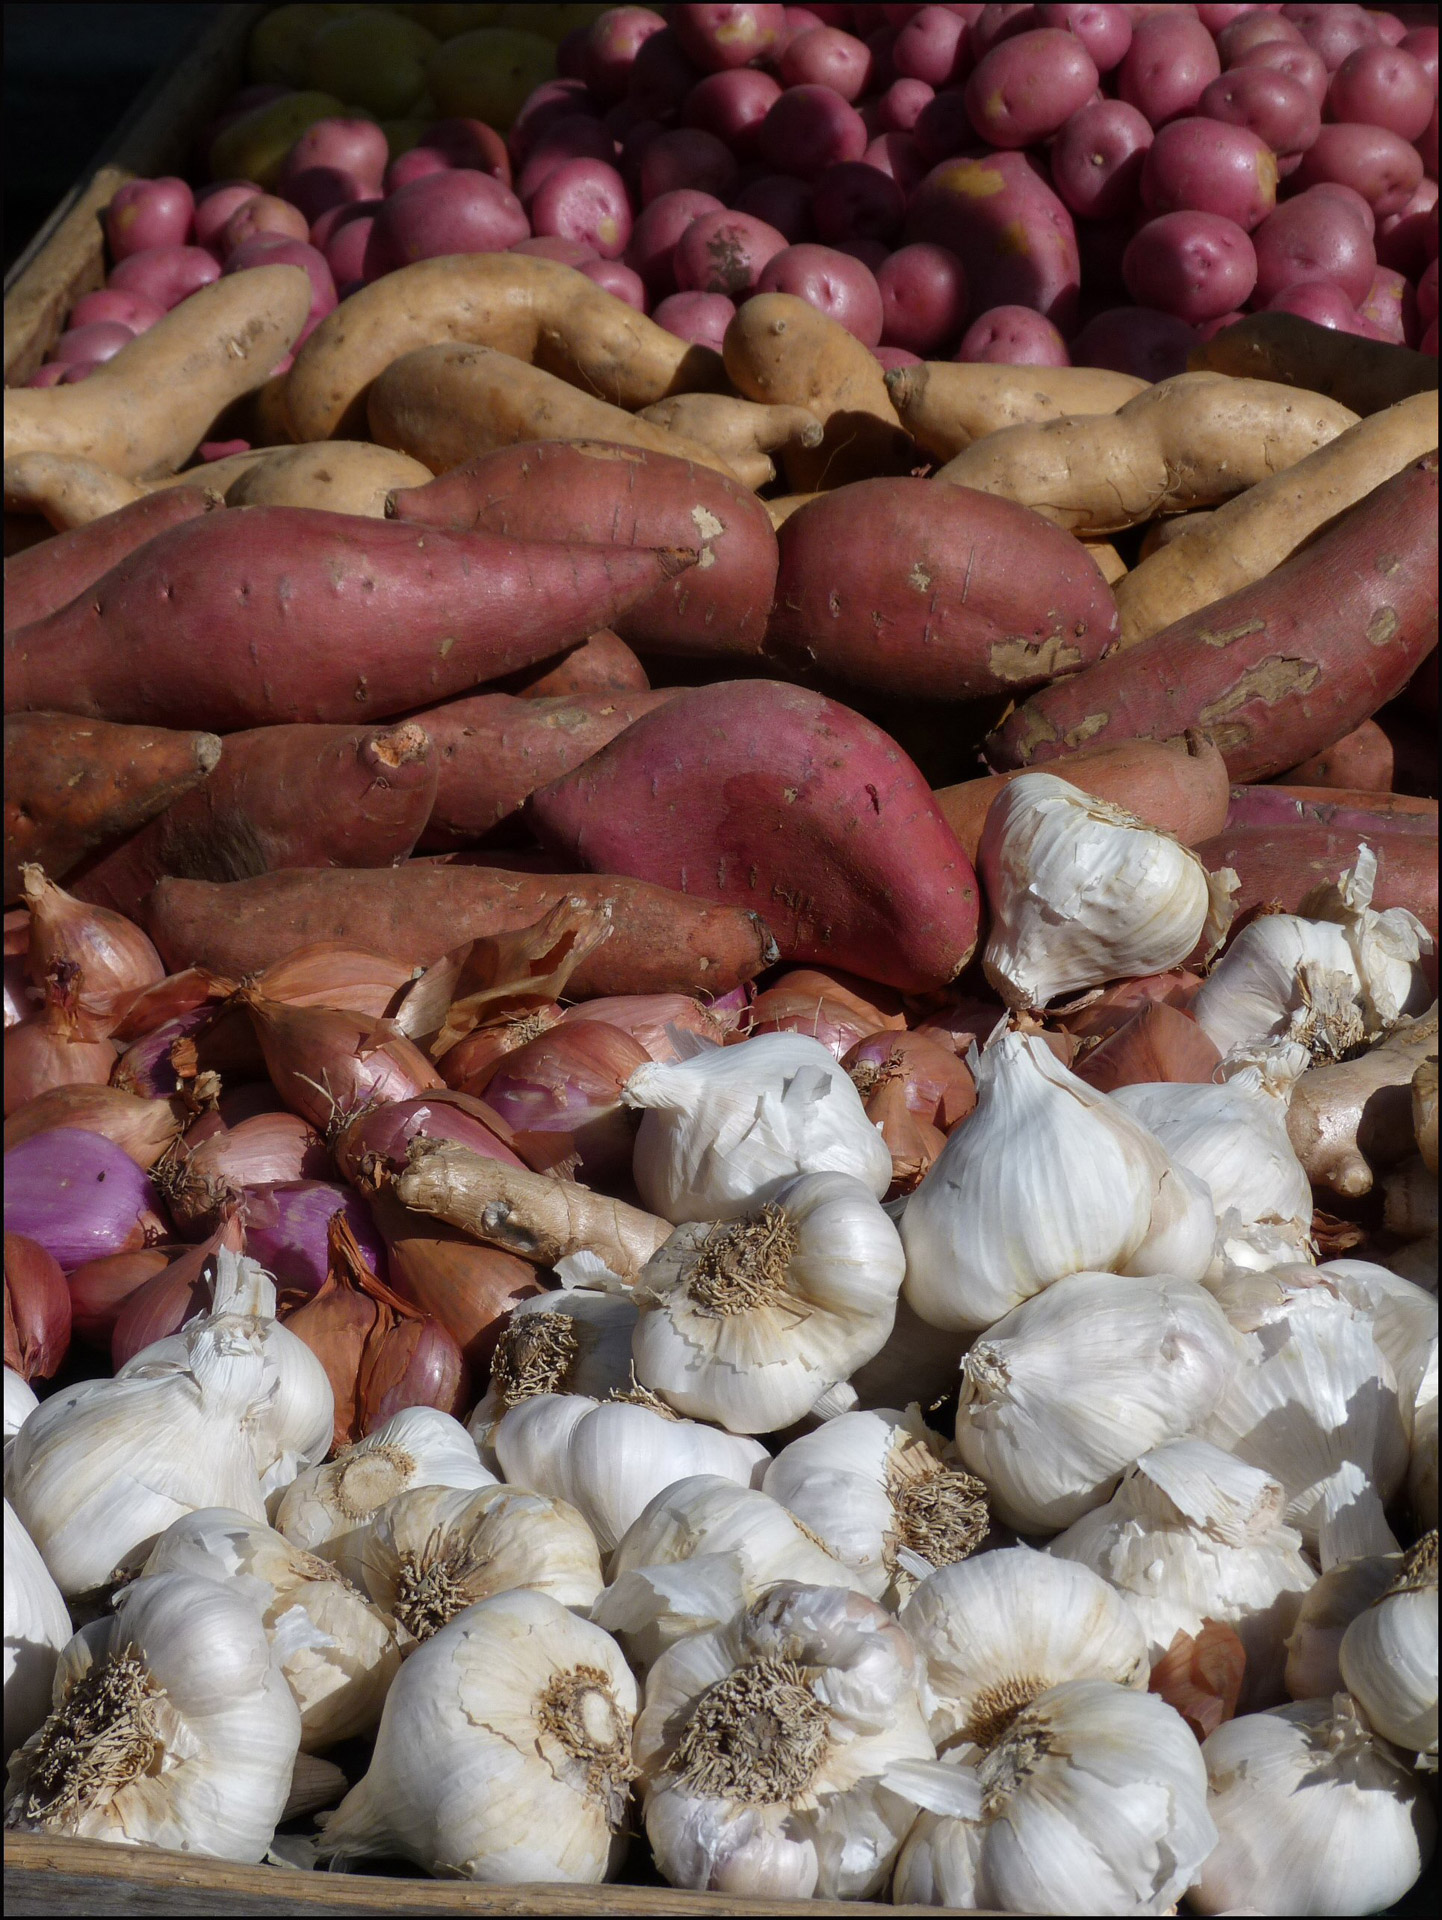 Mixed produce; garlic, yams, potatoes